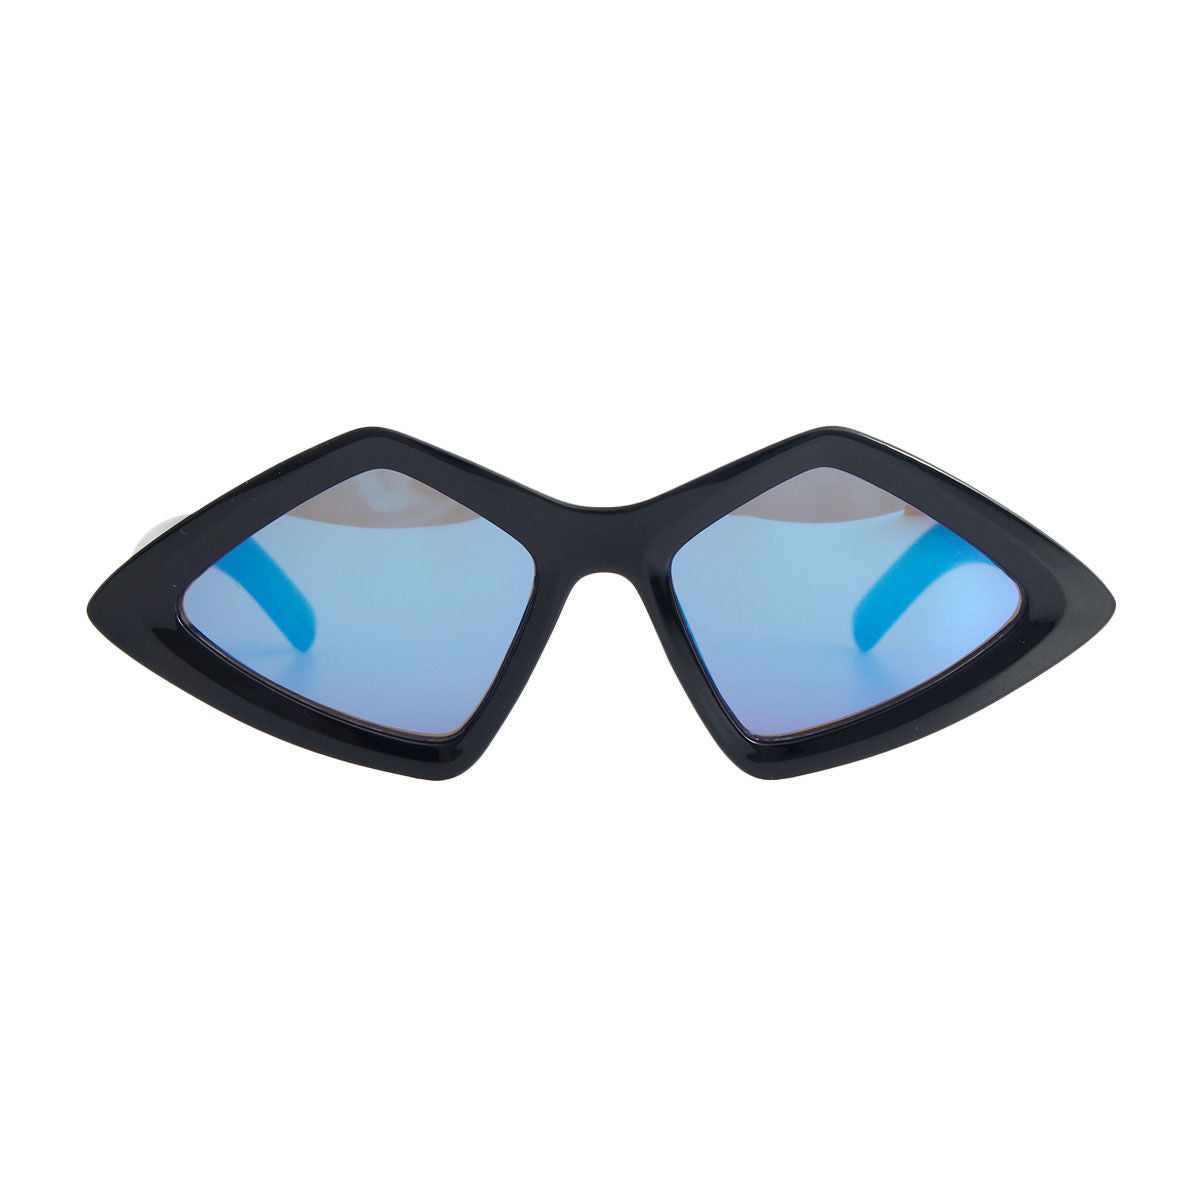 Blue Lens Pointed Frame Sunglasses